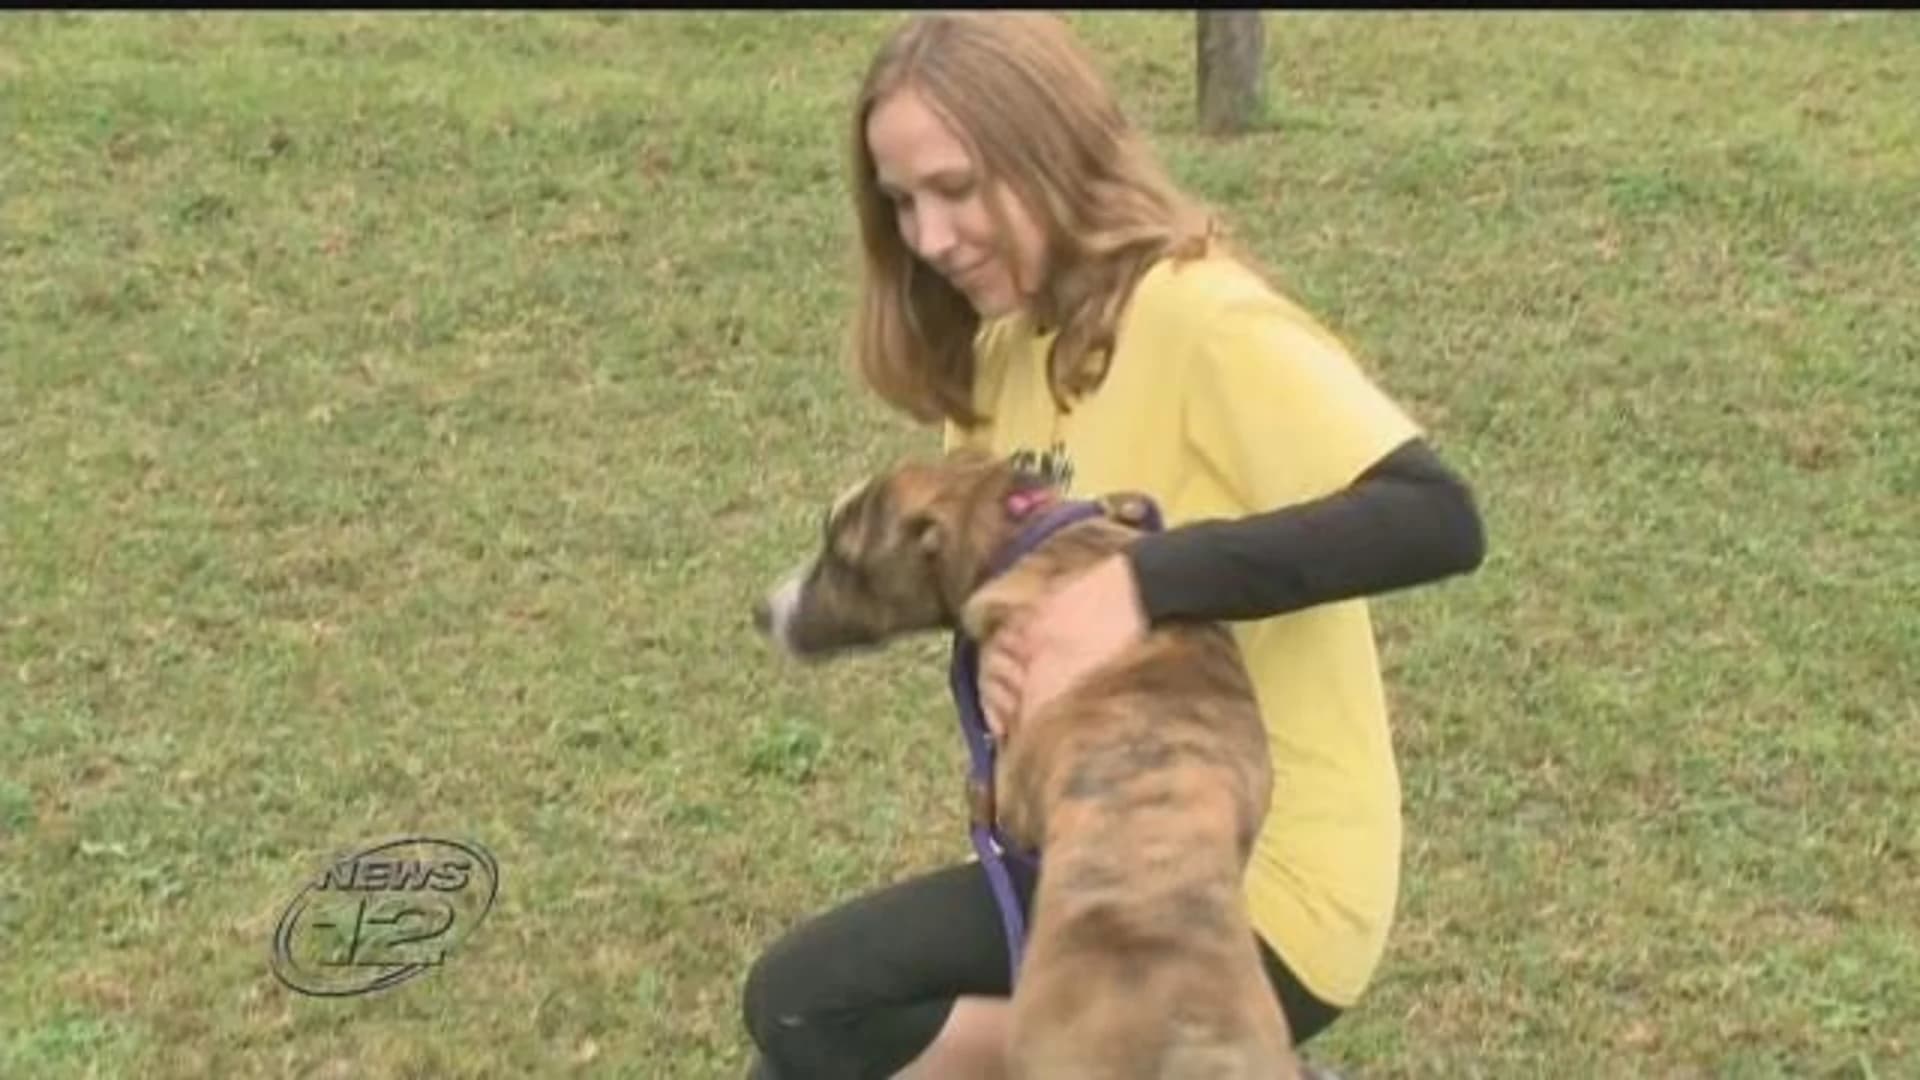 Shelter pets displaced by Harvey arrive in Middletown